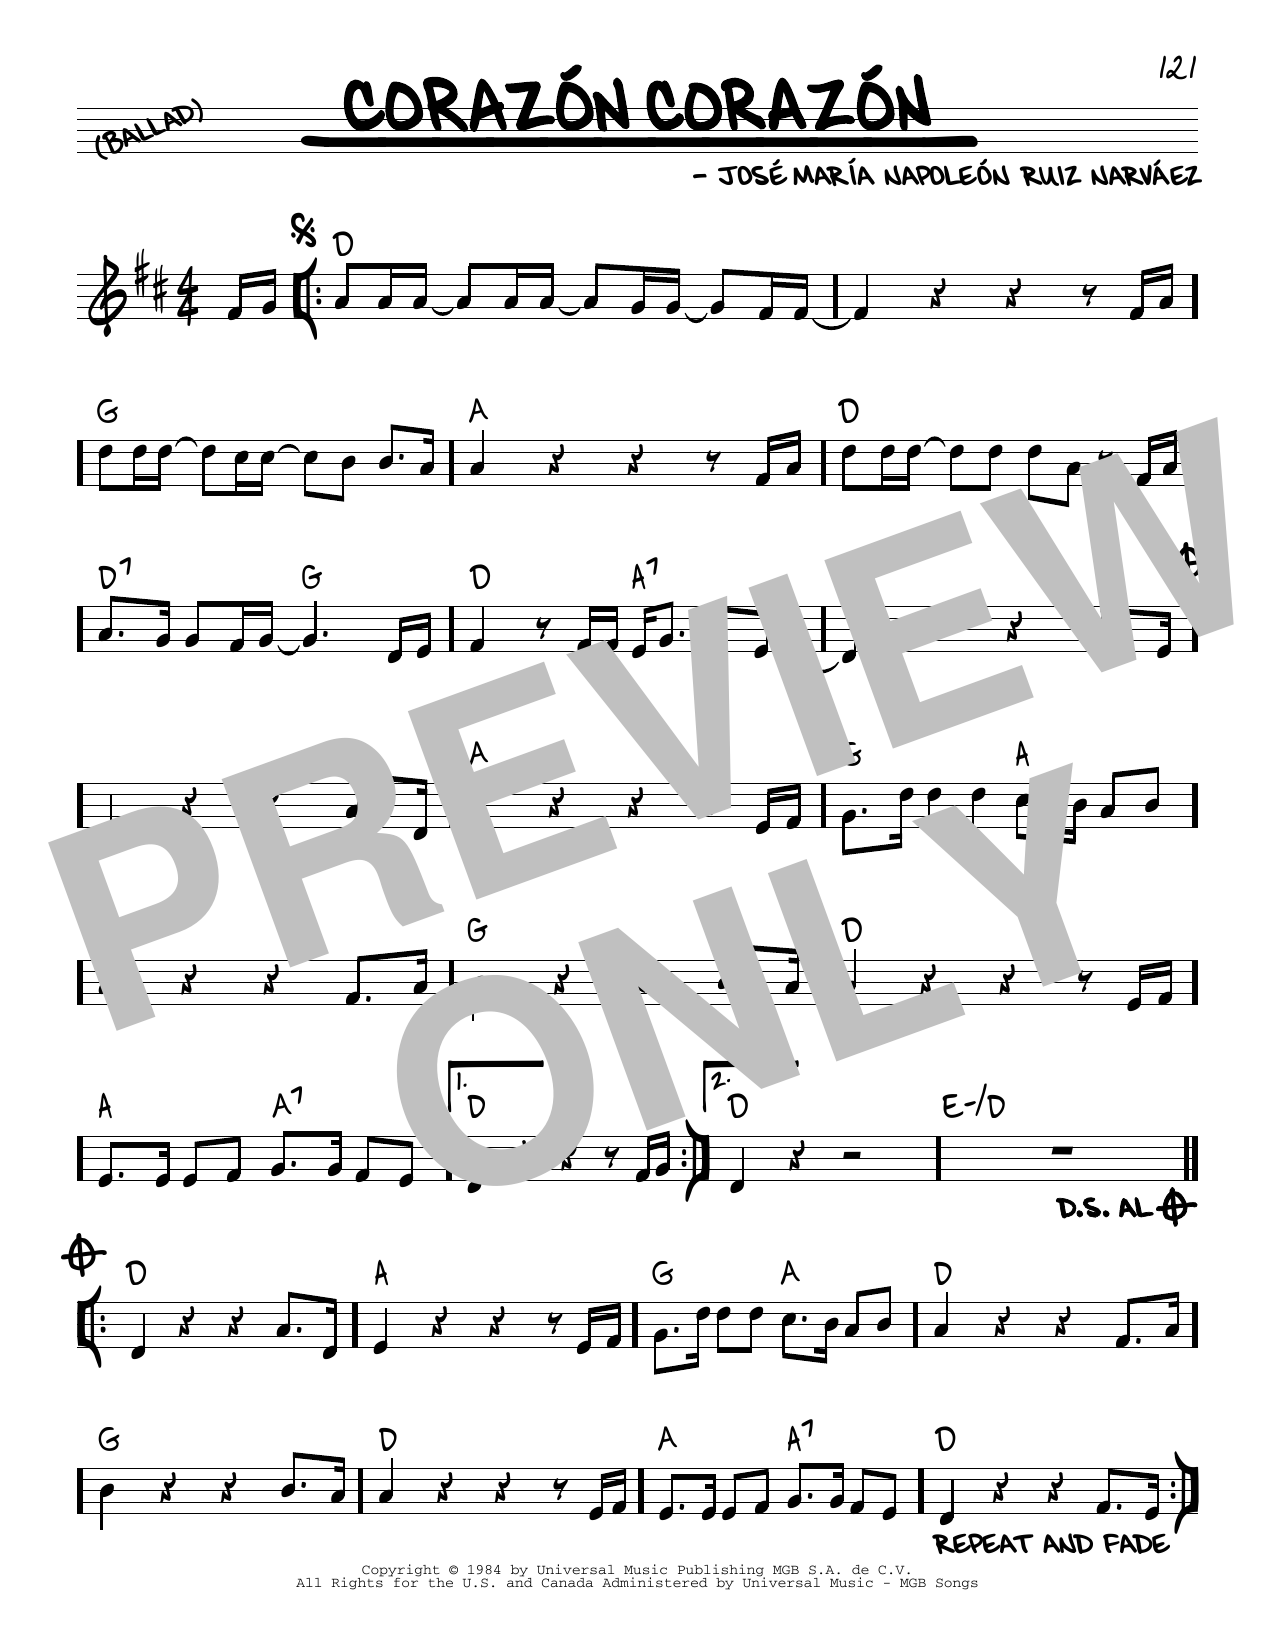 Jose Maria Napoleon Ruiz Narva Corazon Corazon Sheet Music Notes & Chords for Real Book – Melody & Chords - Download or Print PDF